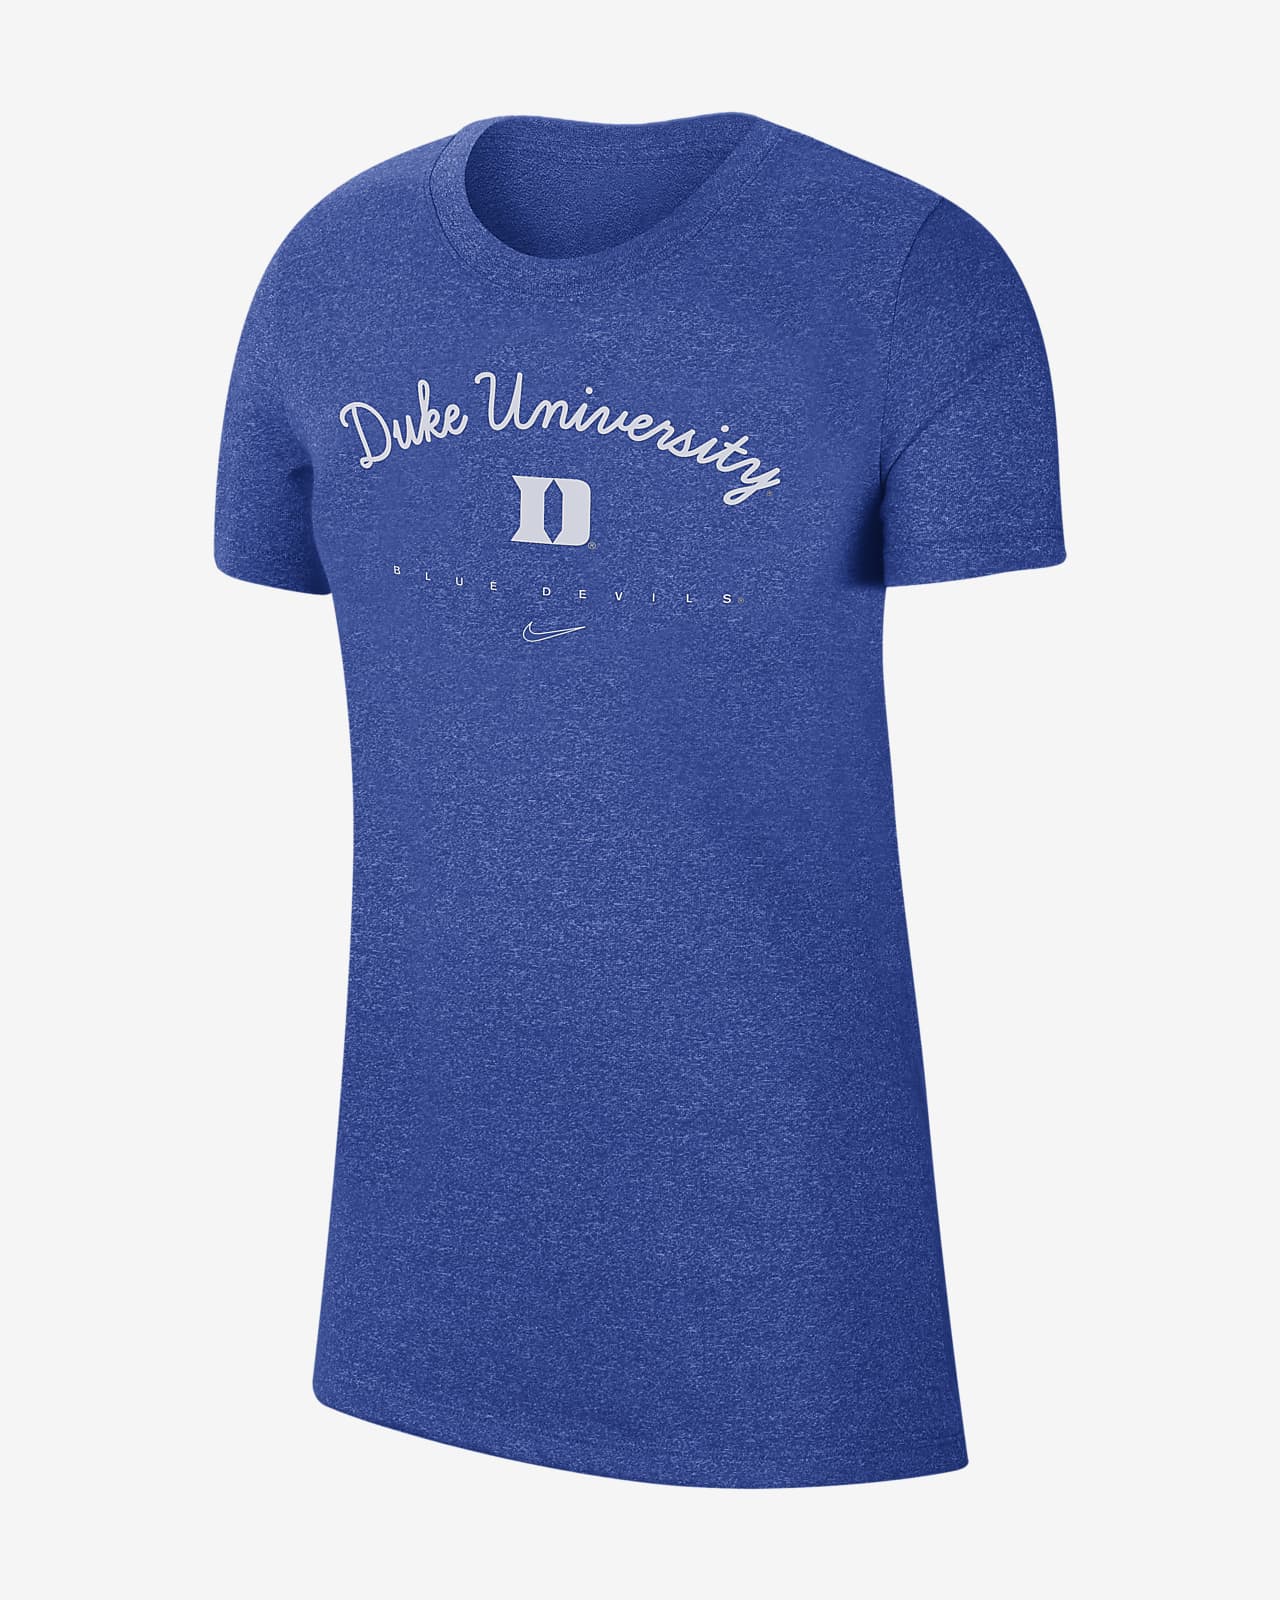 Nike College (Duke) Women's T-Shirt 